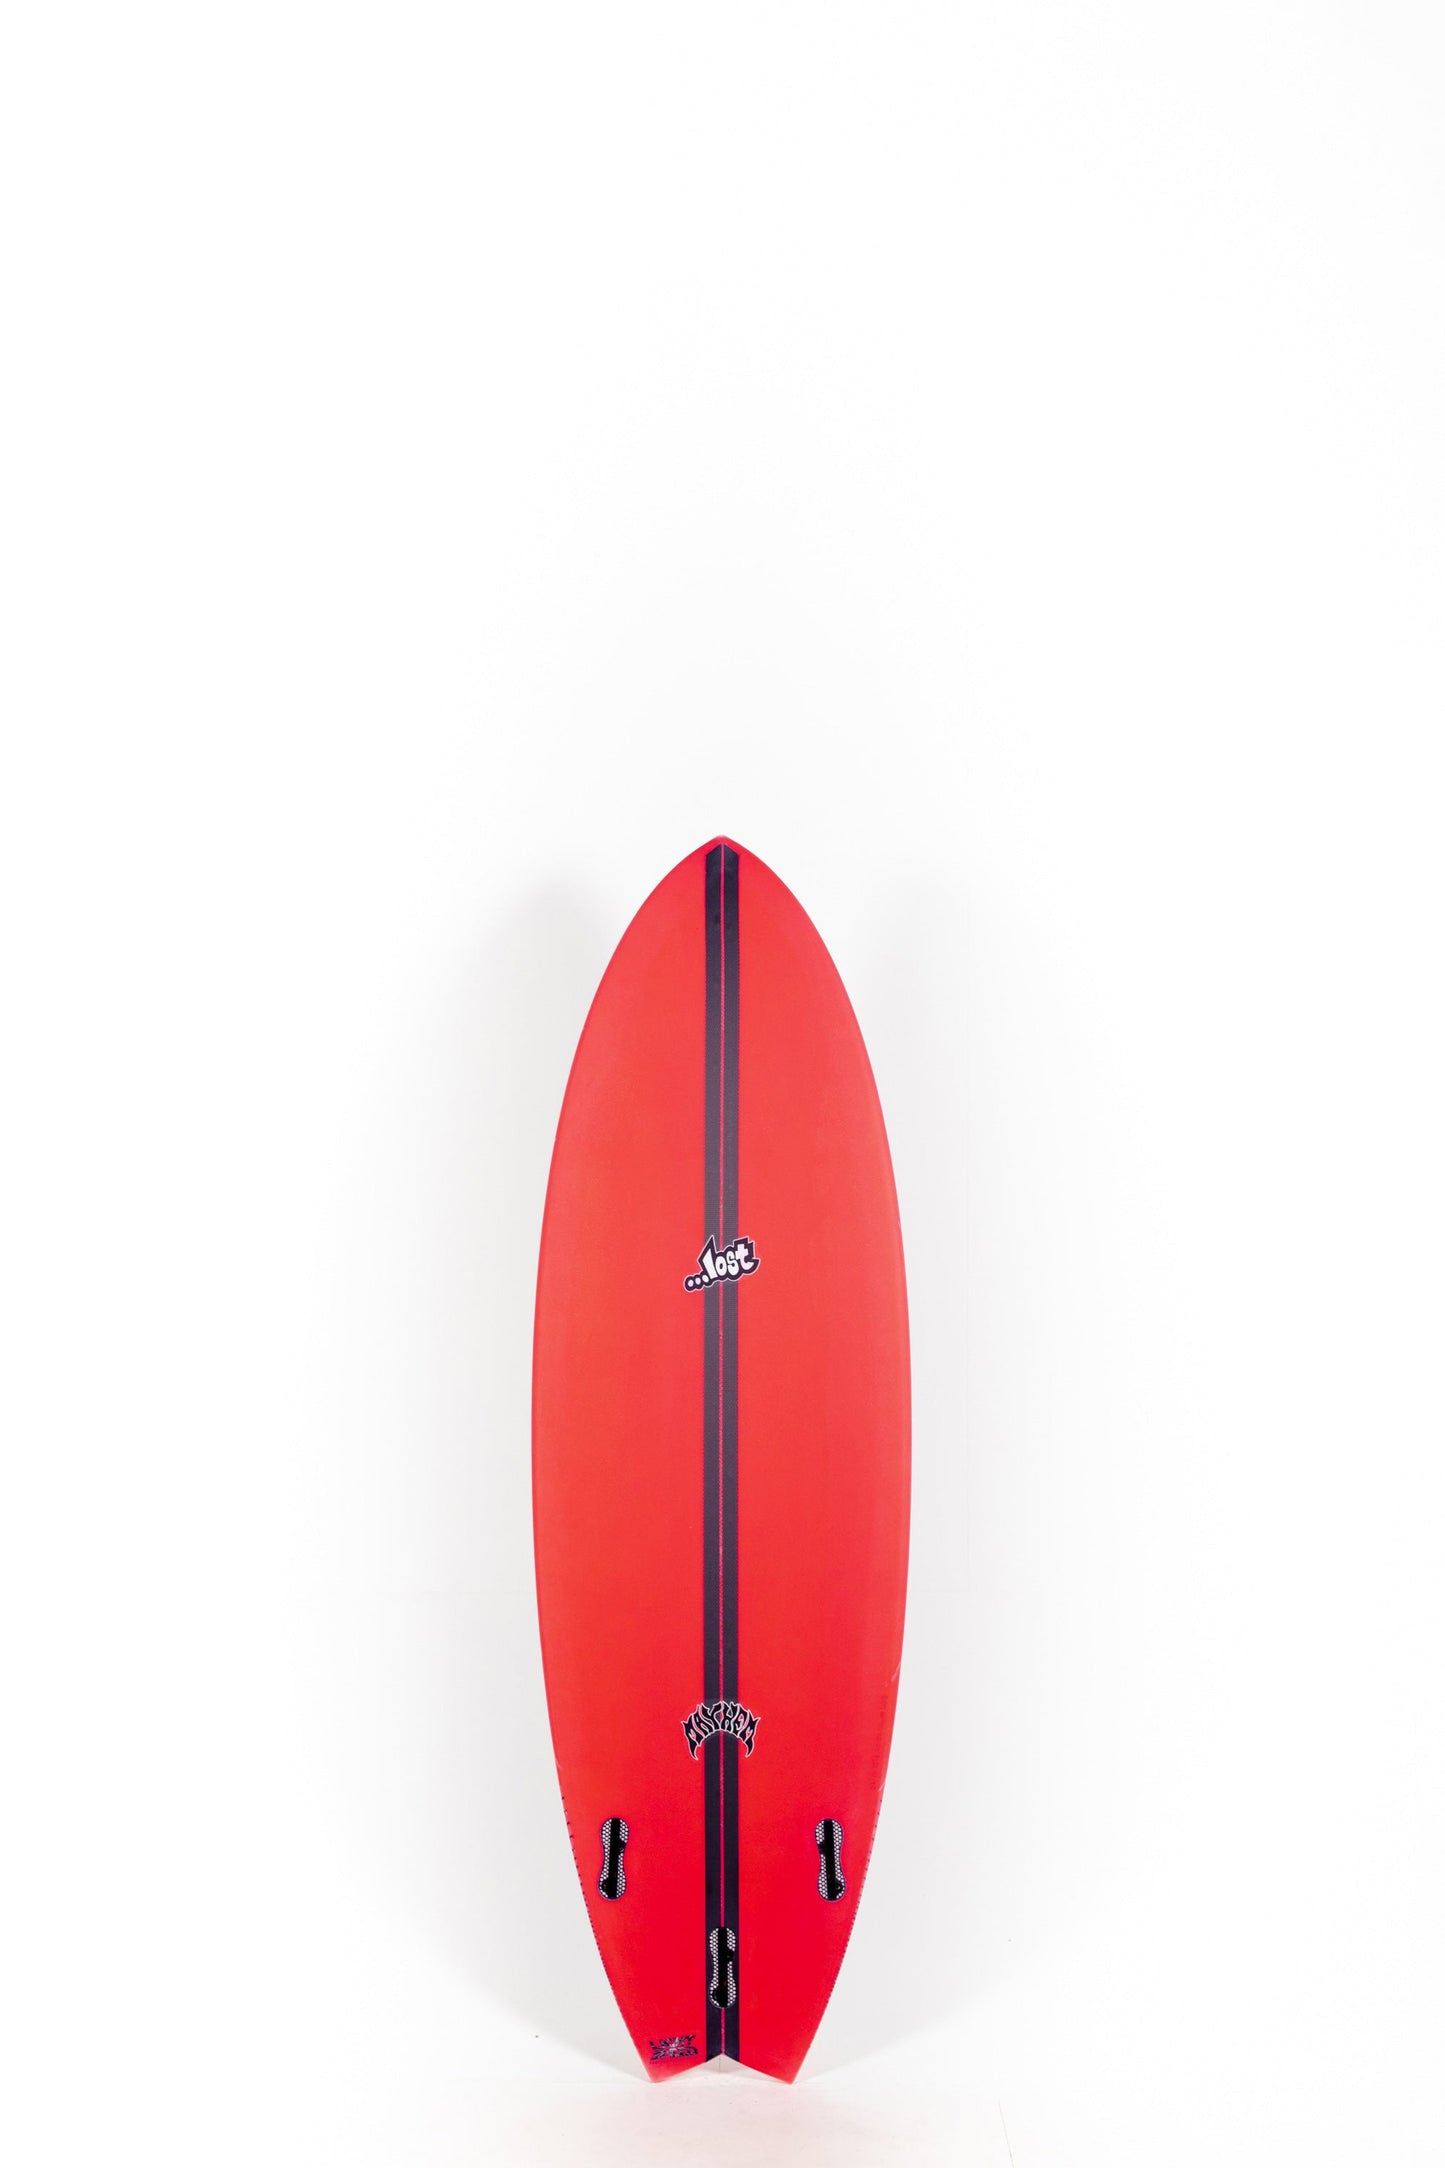 Pukas Surf Shop - Lost Surfboard - ROUND NOSE FISH - RNF '96 - Light Speed - 5'6"x 19'75" x 2.40 x 29,5L